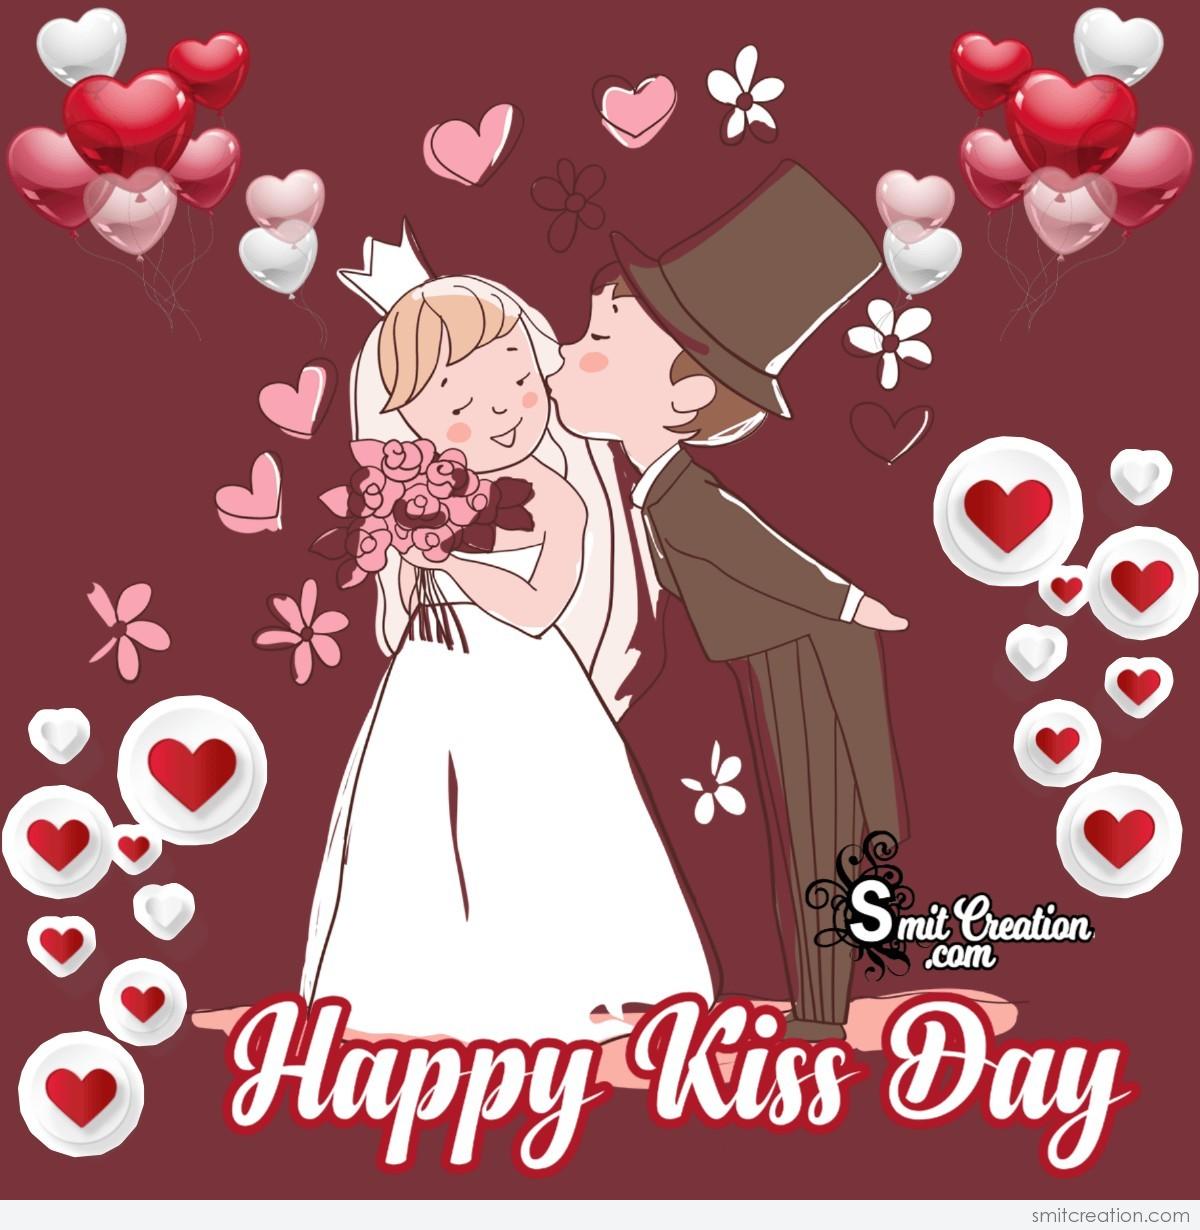 Happy Kiss Day Images - SmitCreation.com